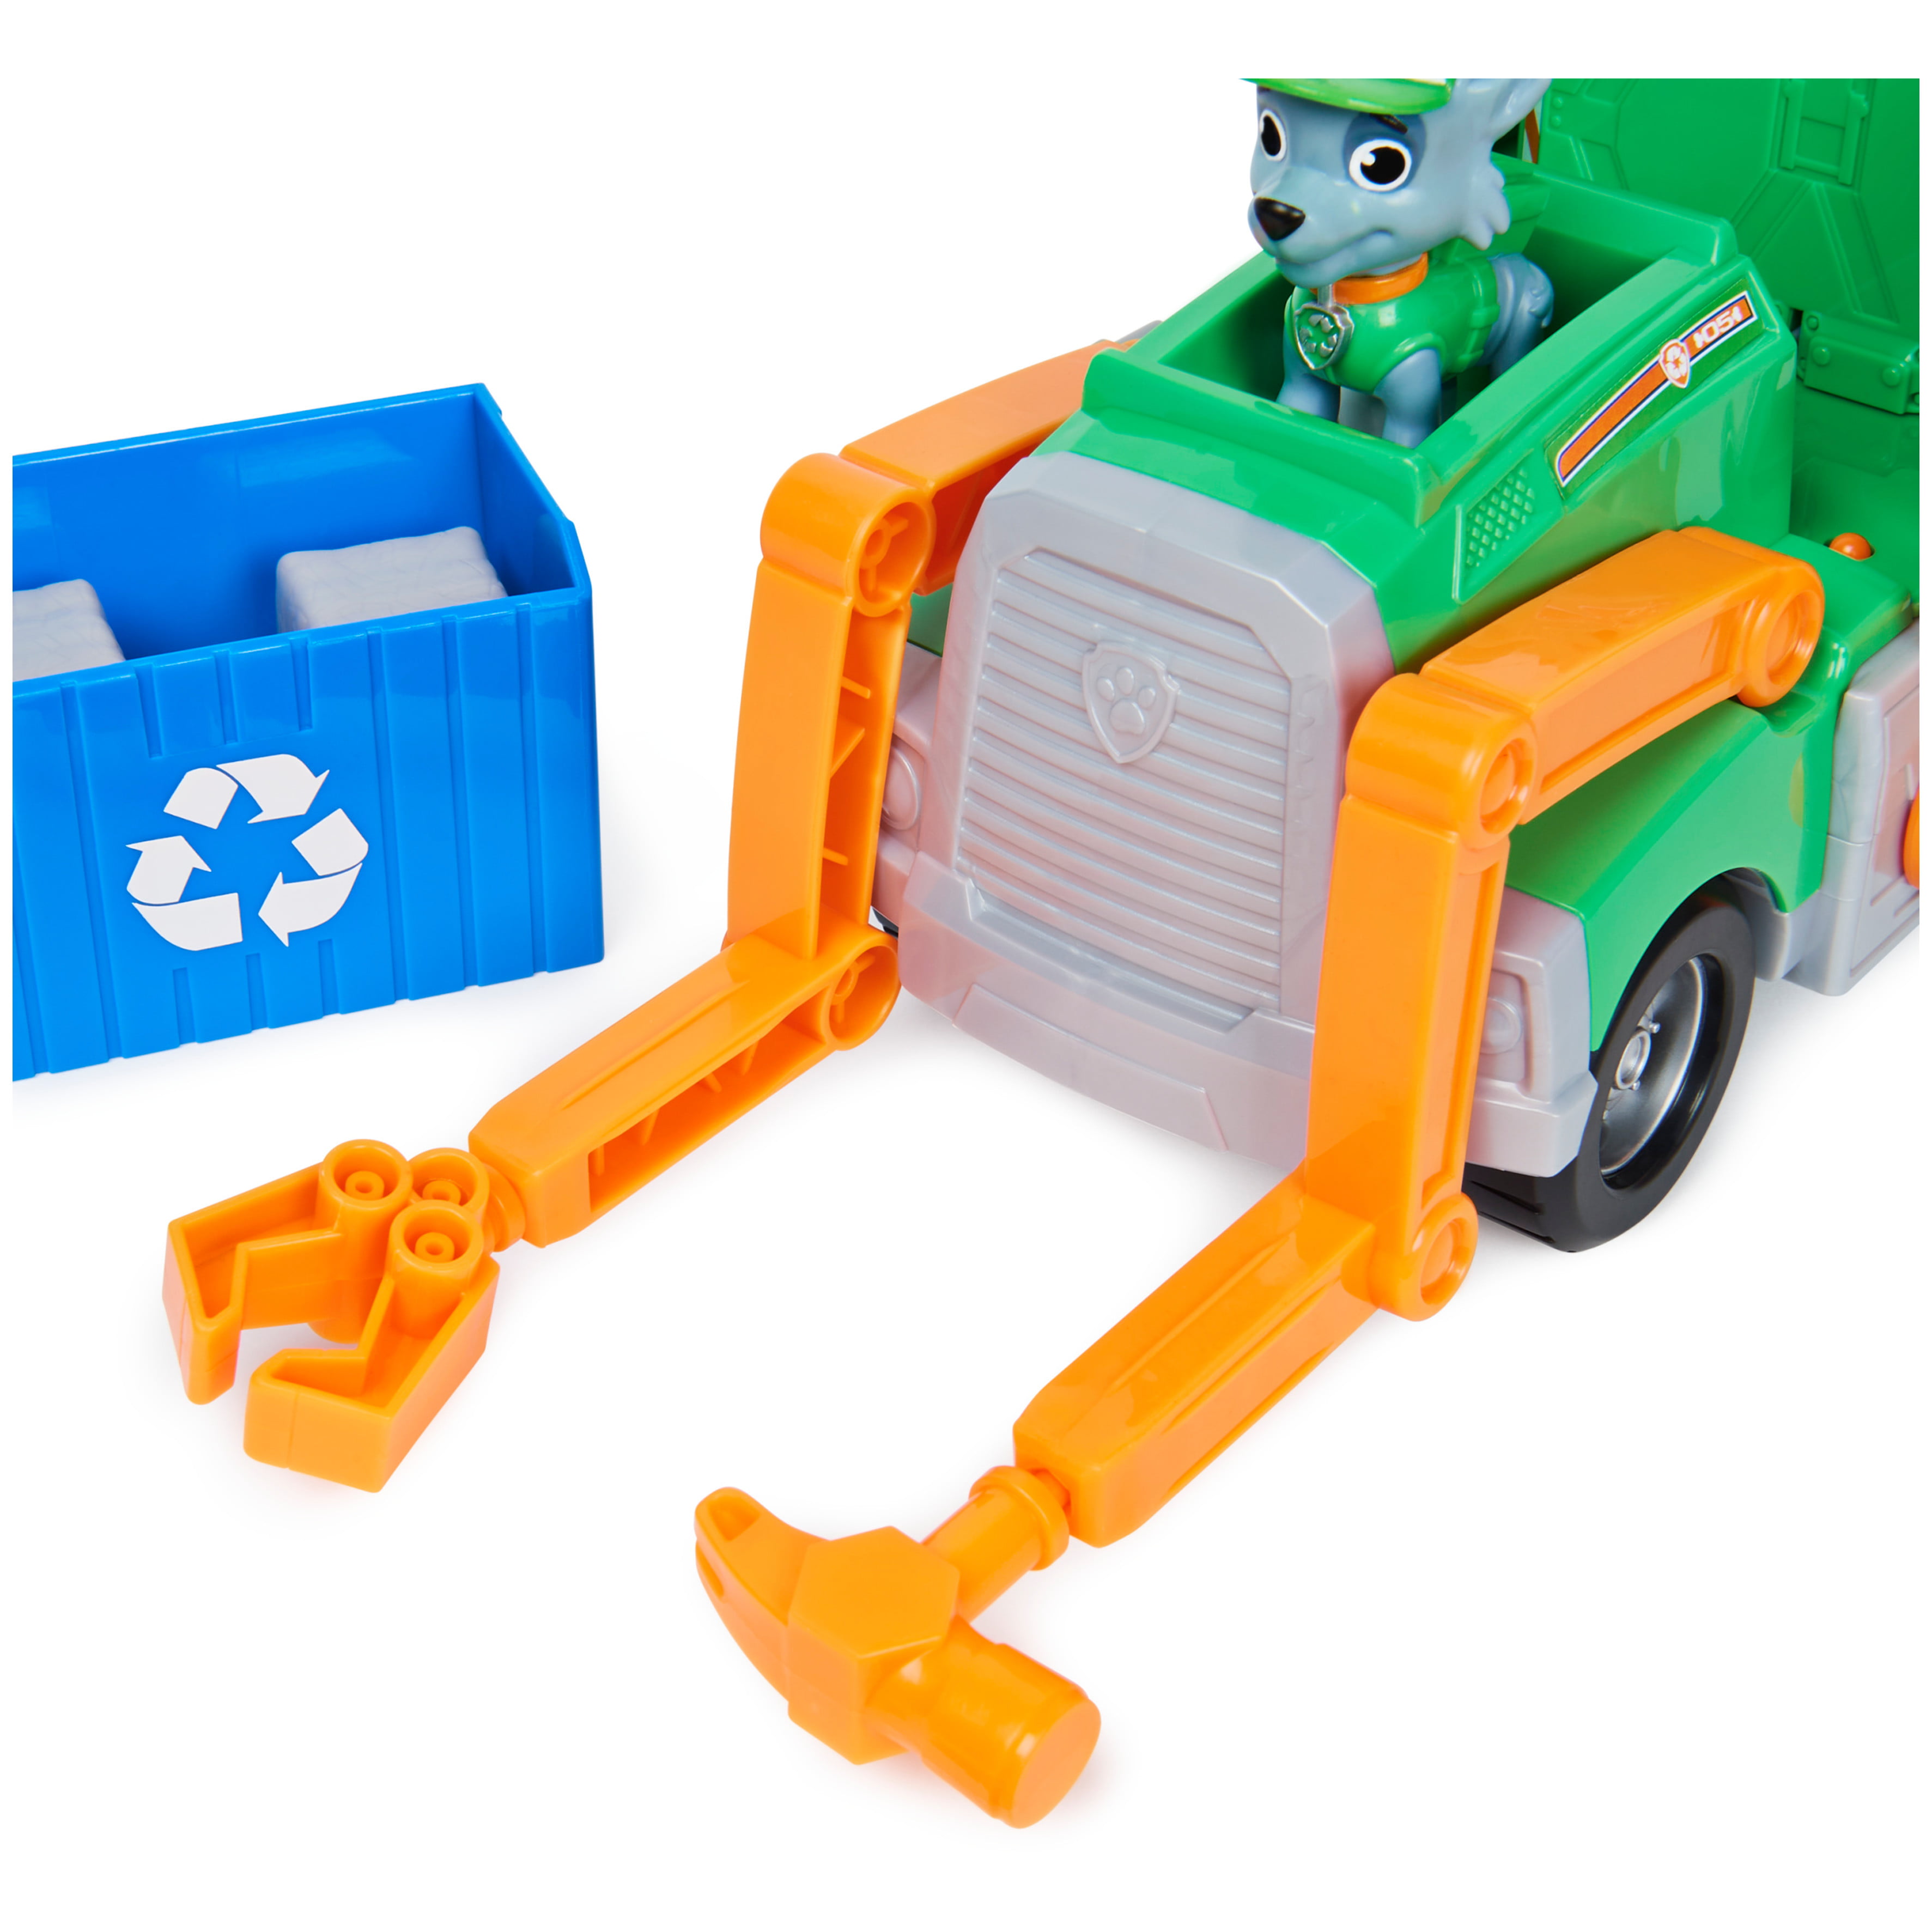 Rockys Recycling Truck und FigurSpielzeug für Kinder PAW Patrol 6052310 